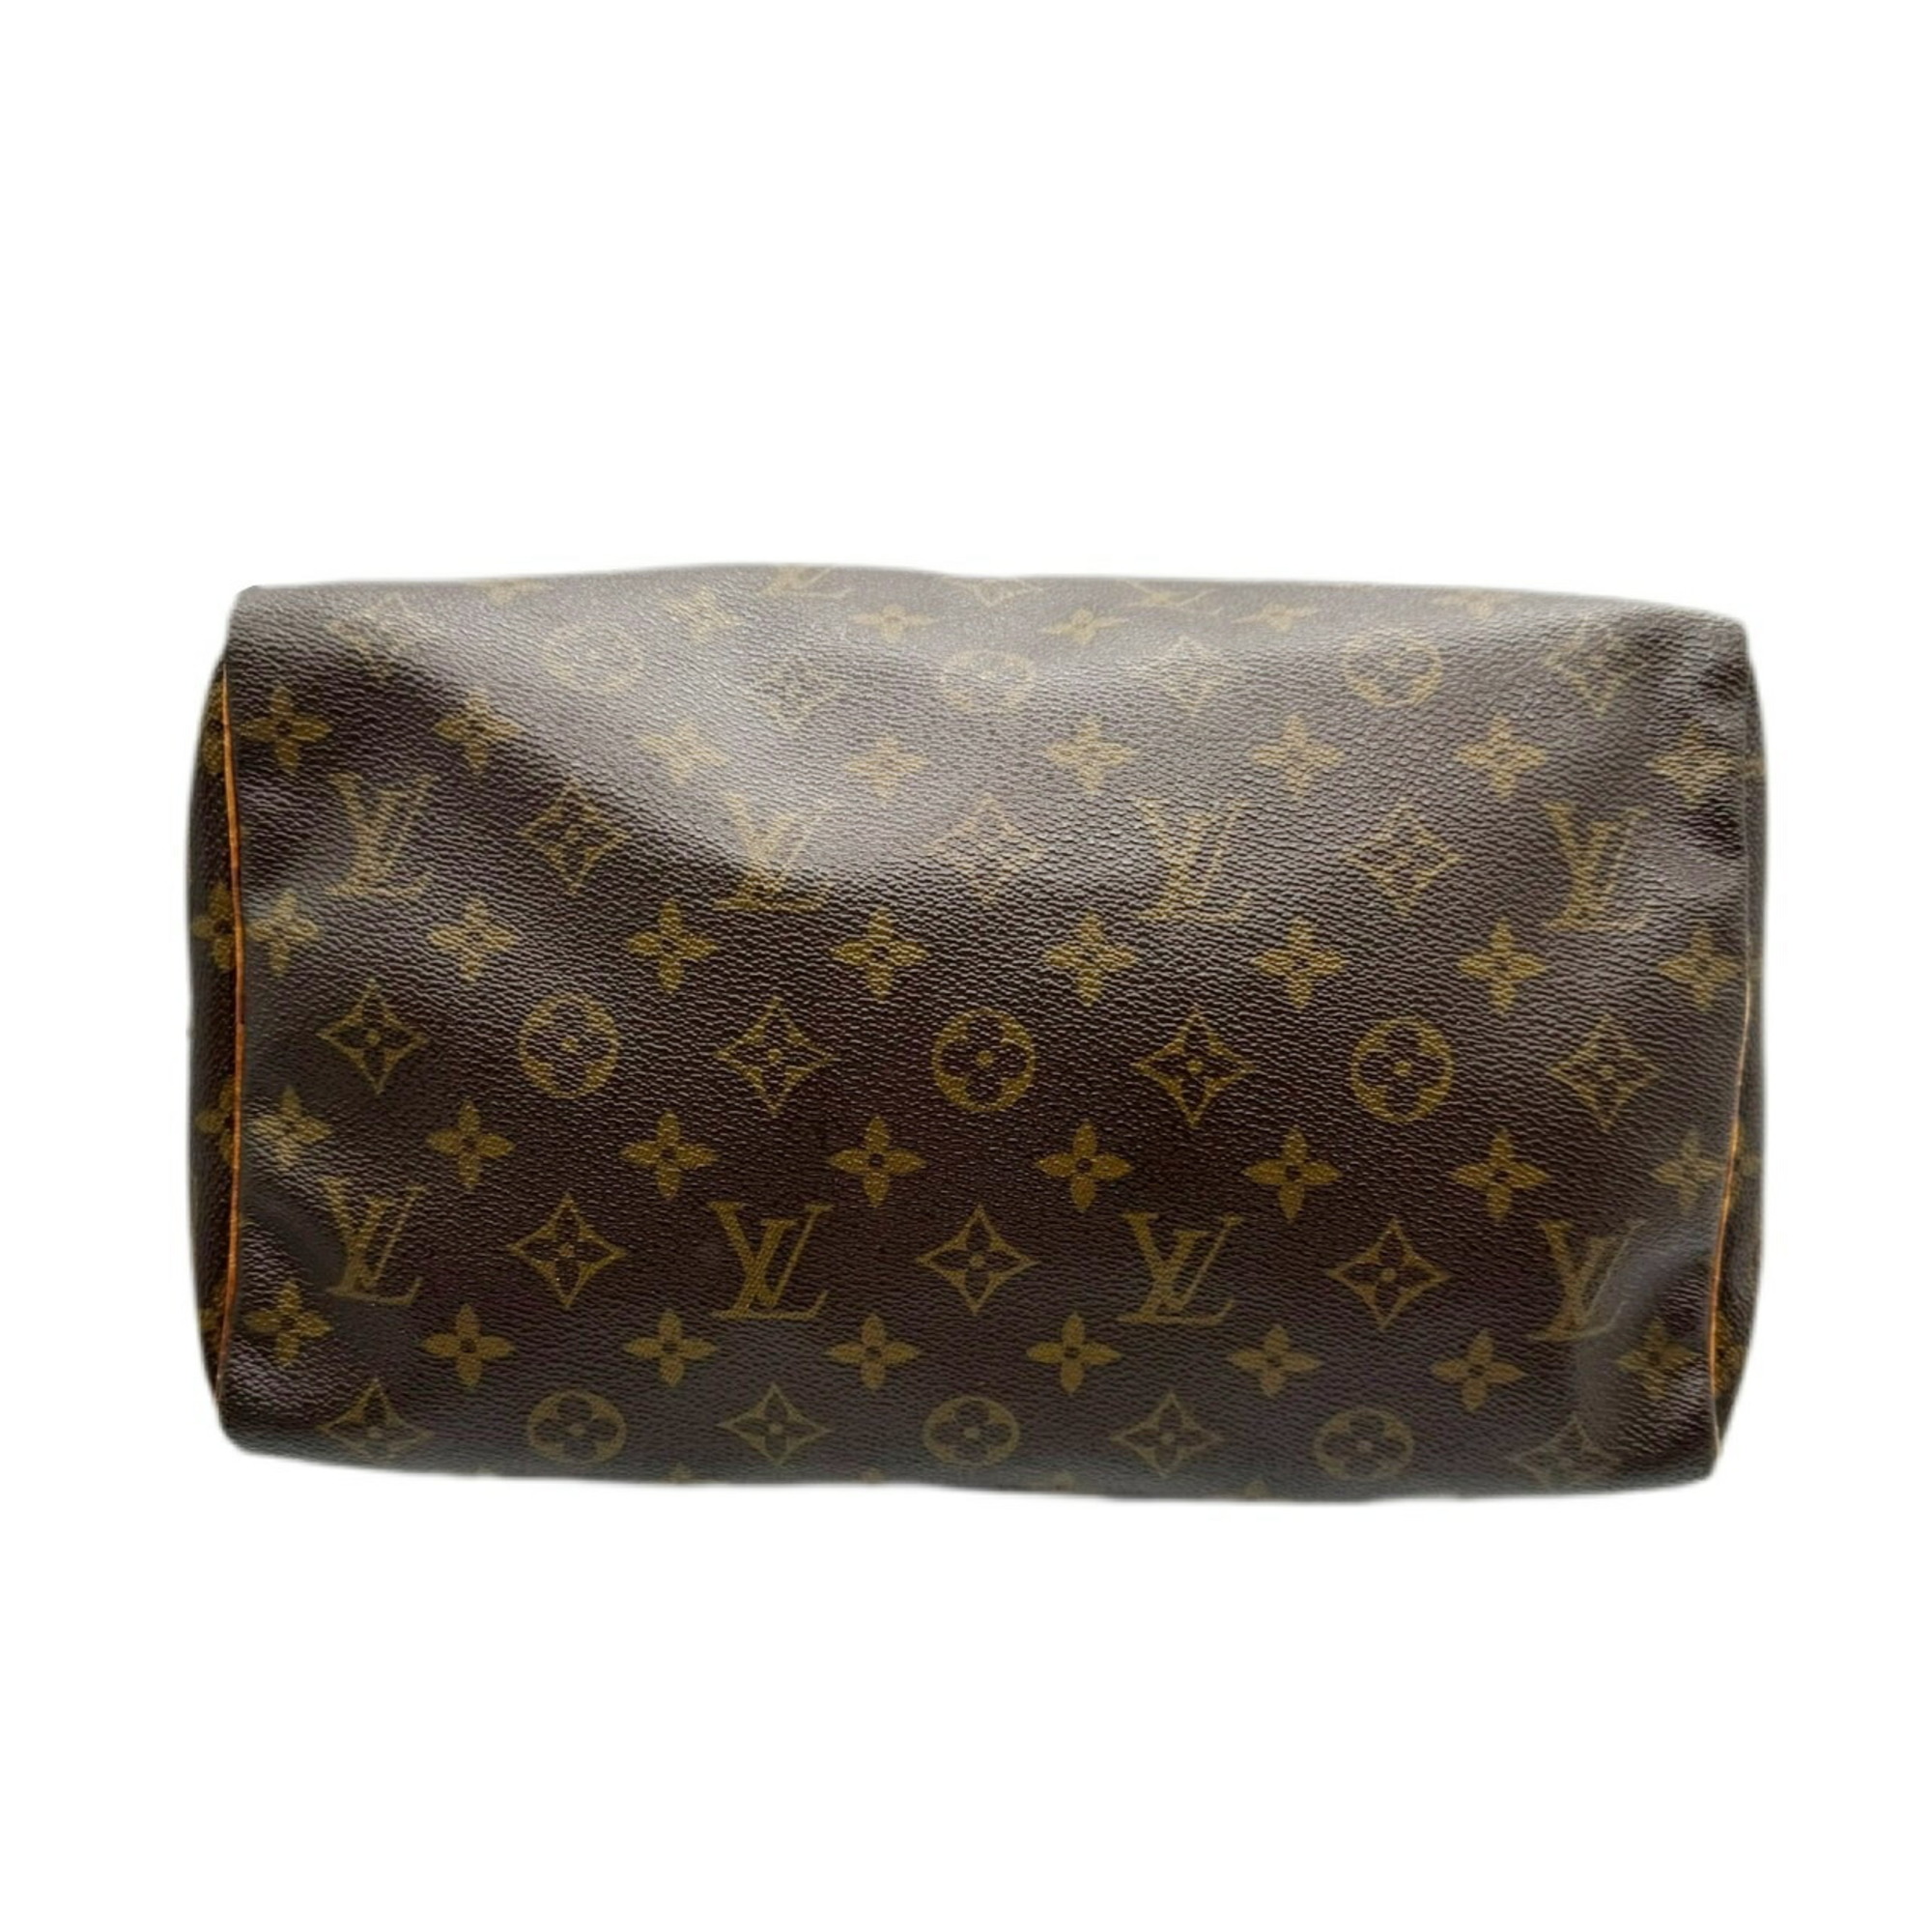 LOUIS VUITTON Louis Vuitton Speedy 30 Monogram Handbag M41108 SP0994 Women's Men's